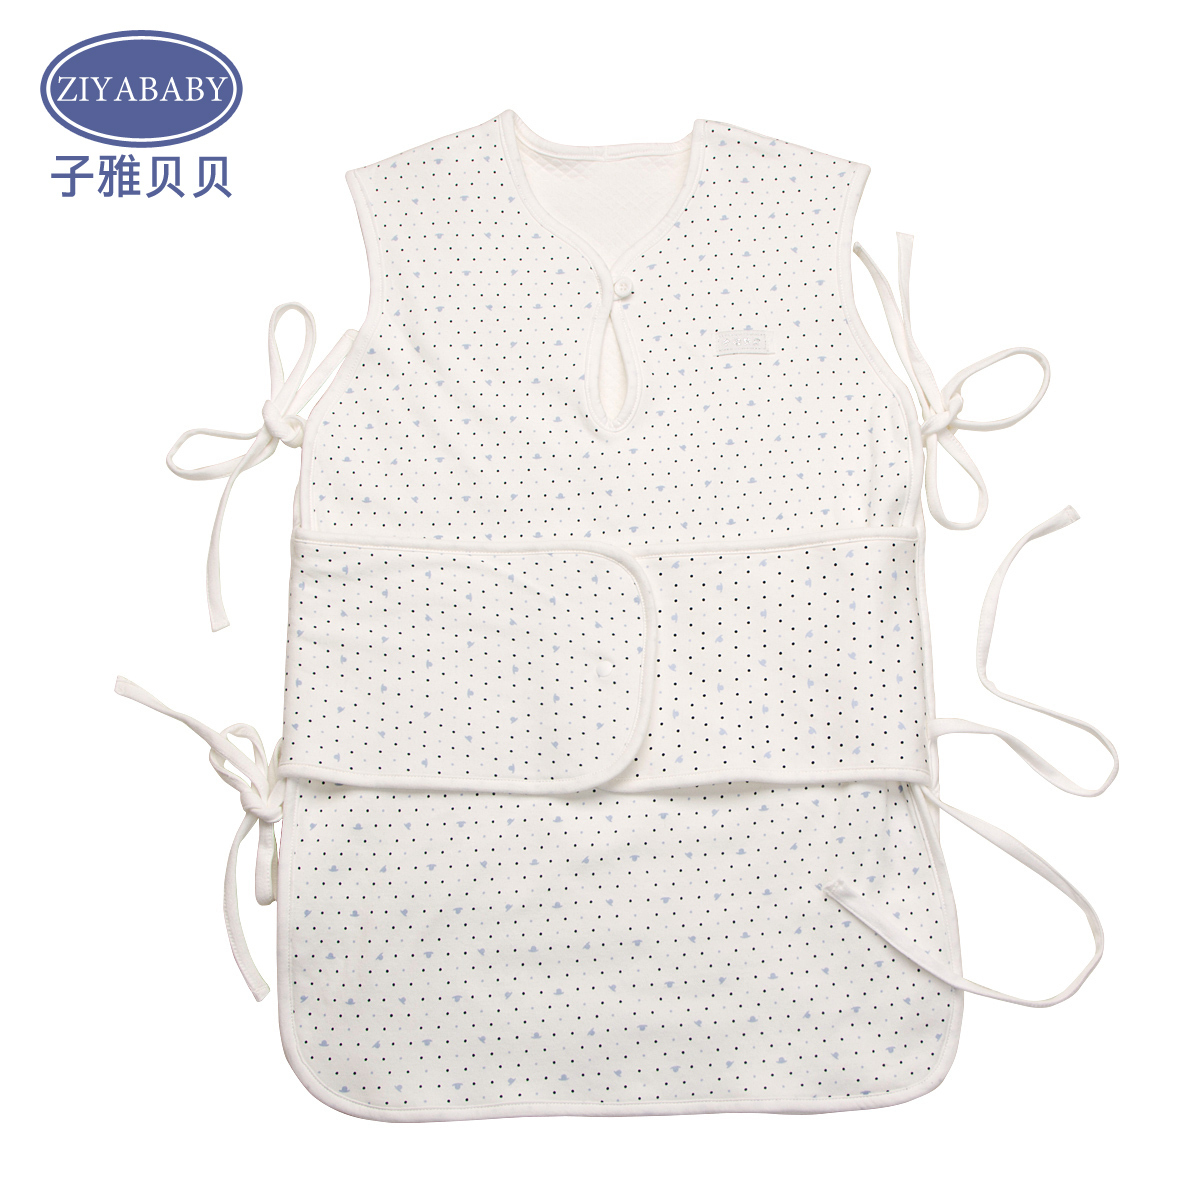 Baby sleeping bag autumn and winter child anti tipi 100% cotton baby sleeping bag new arrival blue cap sleeping bag